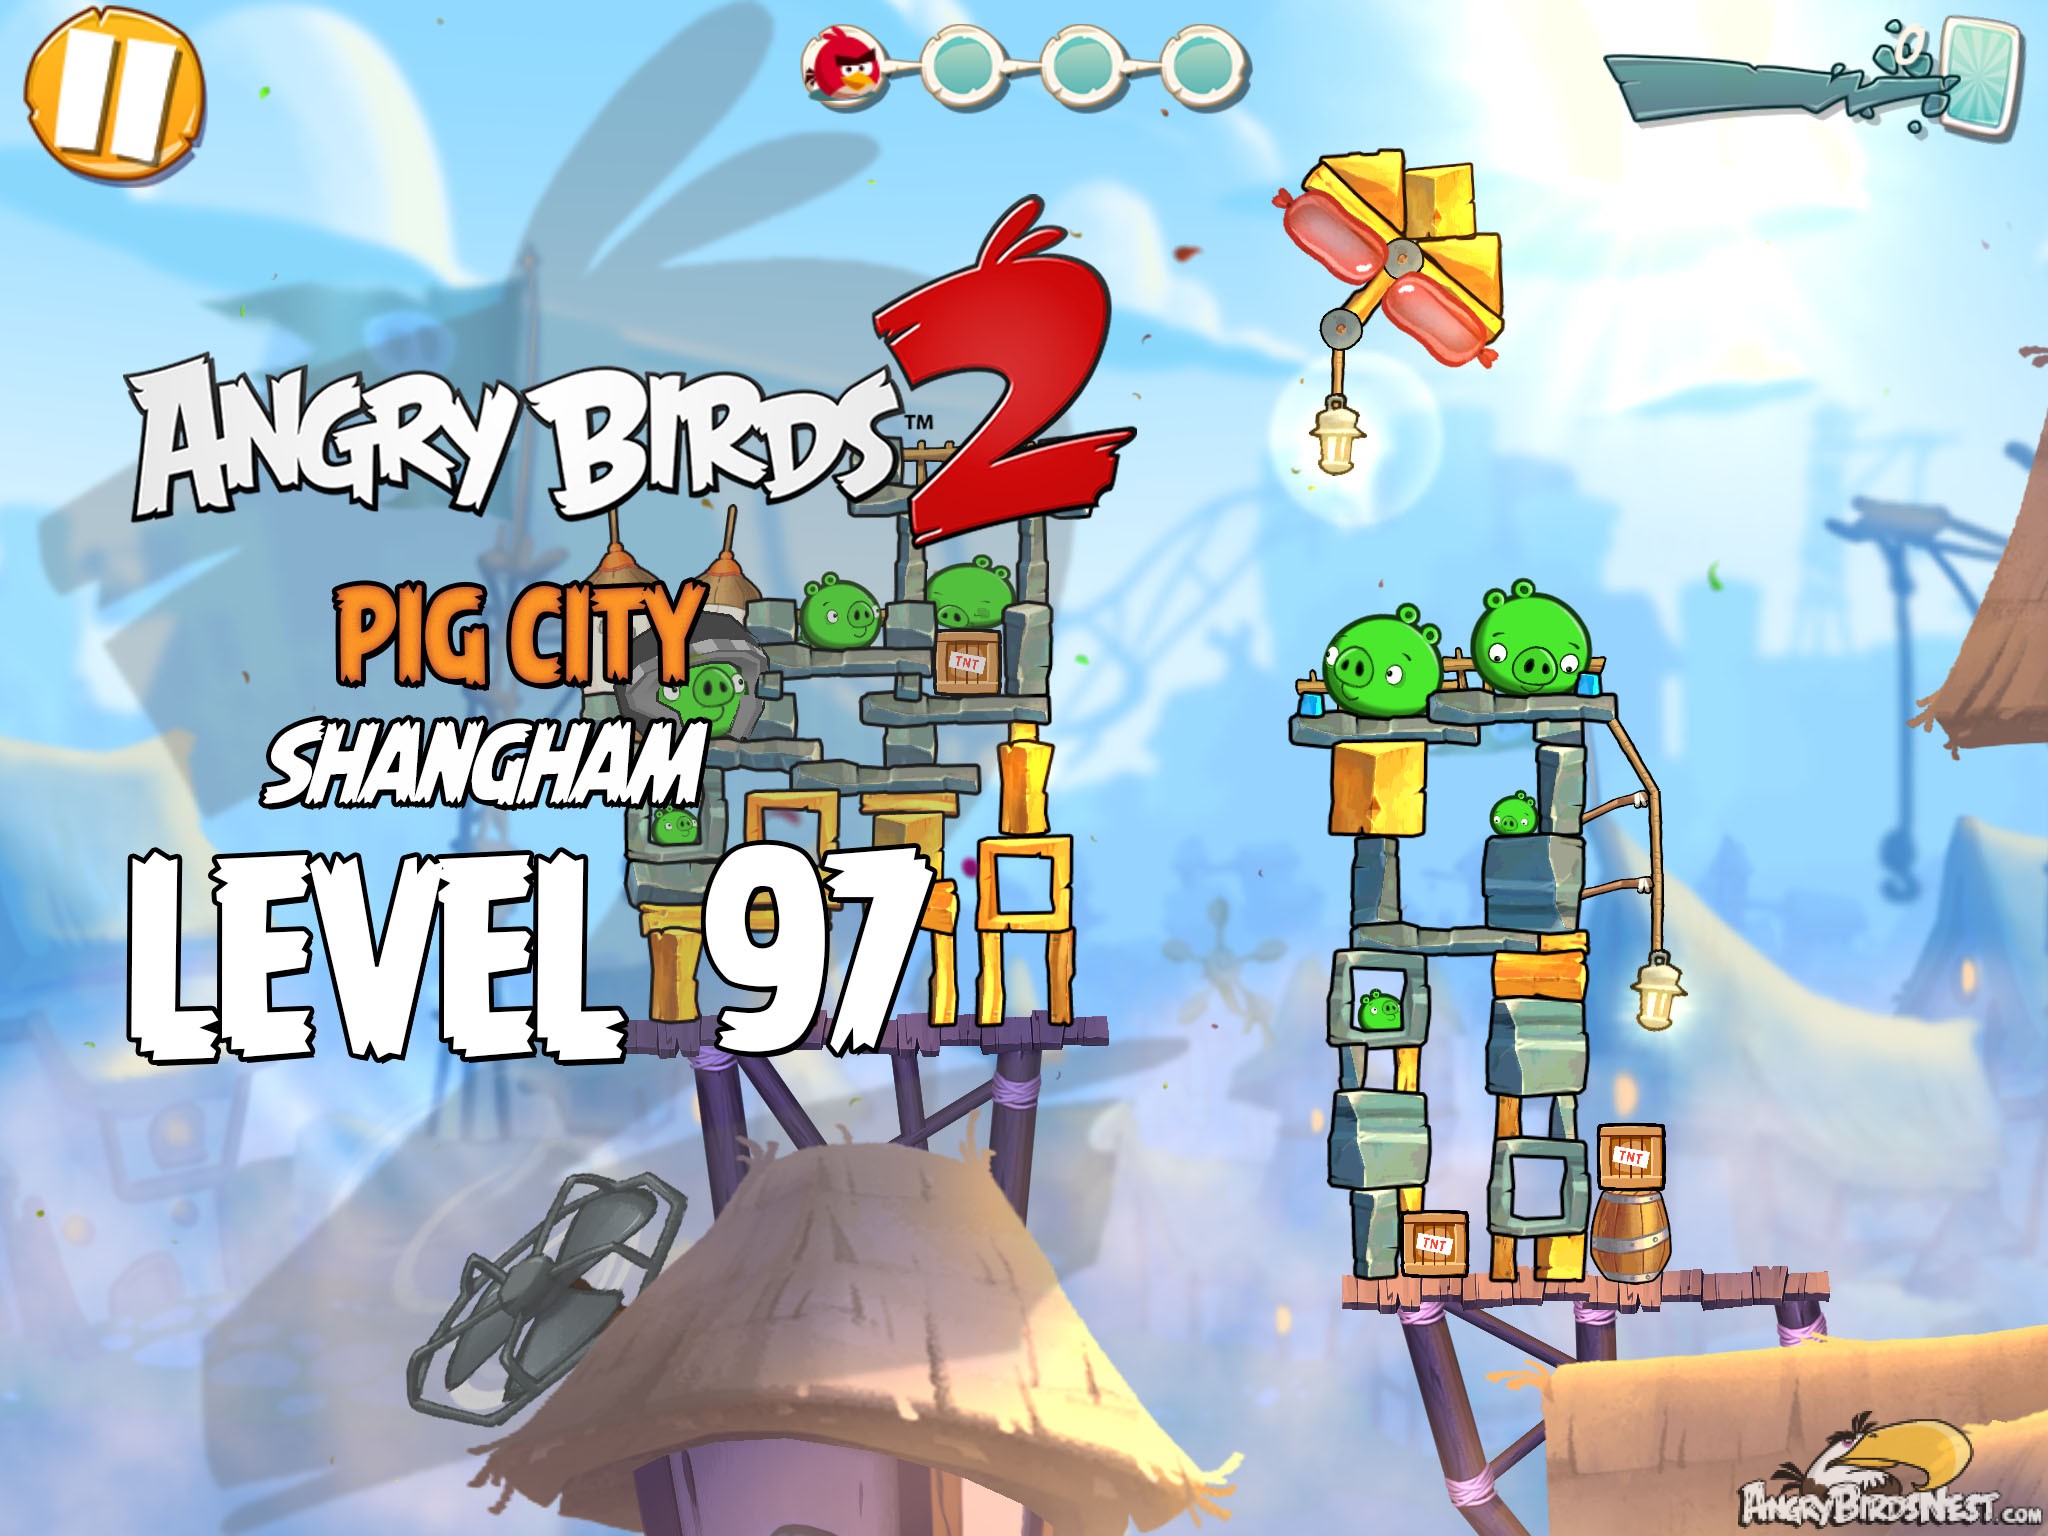 Angry Birds 2 Pig City Shangham Level 97